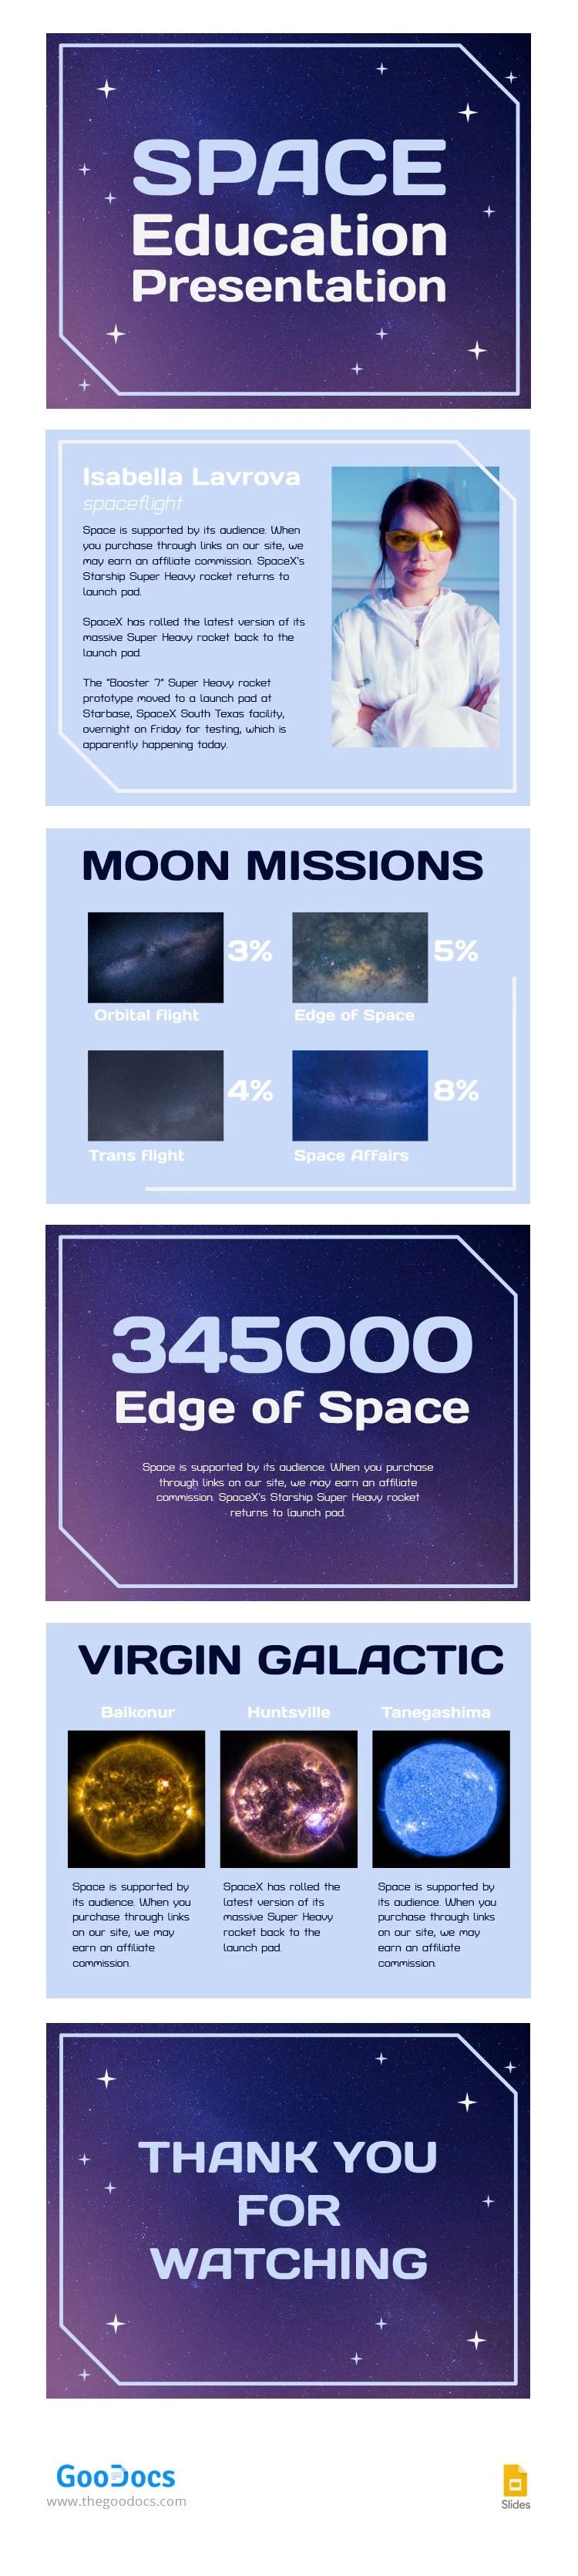 Space Education Presentation - free Google Docs Template - 10064424